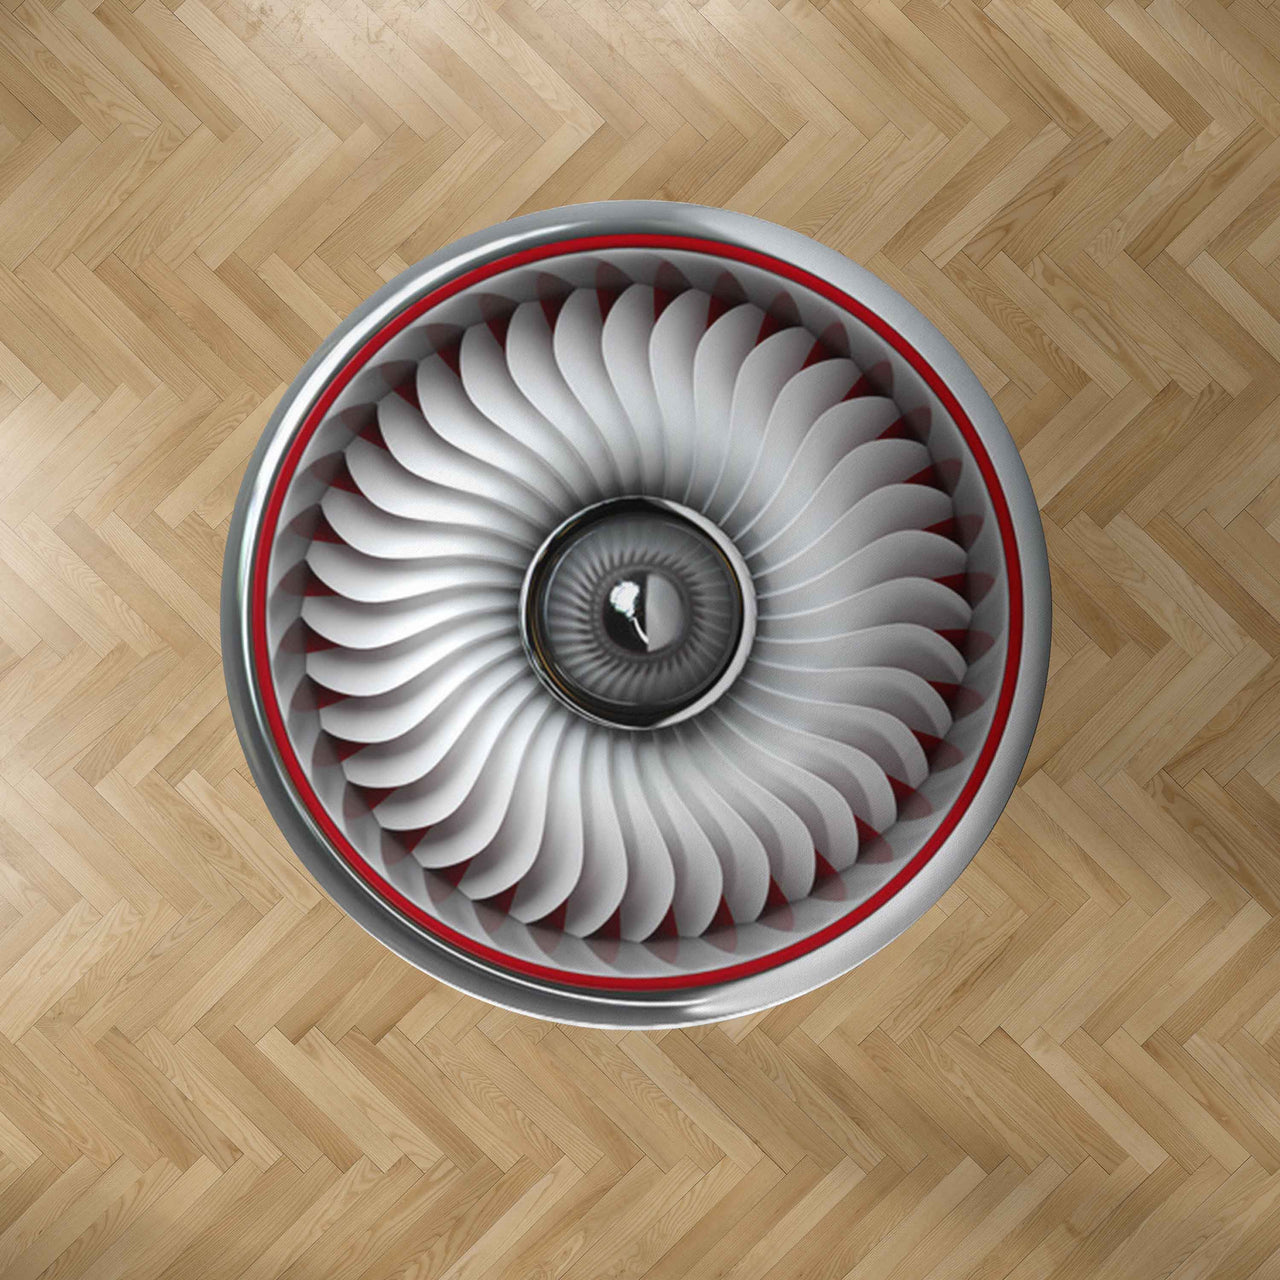 Graphical Jet Engine & Red Line Designed Carpet & Floor Mats (Round)